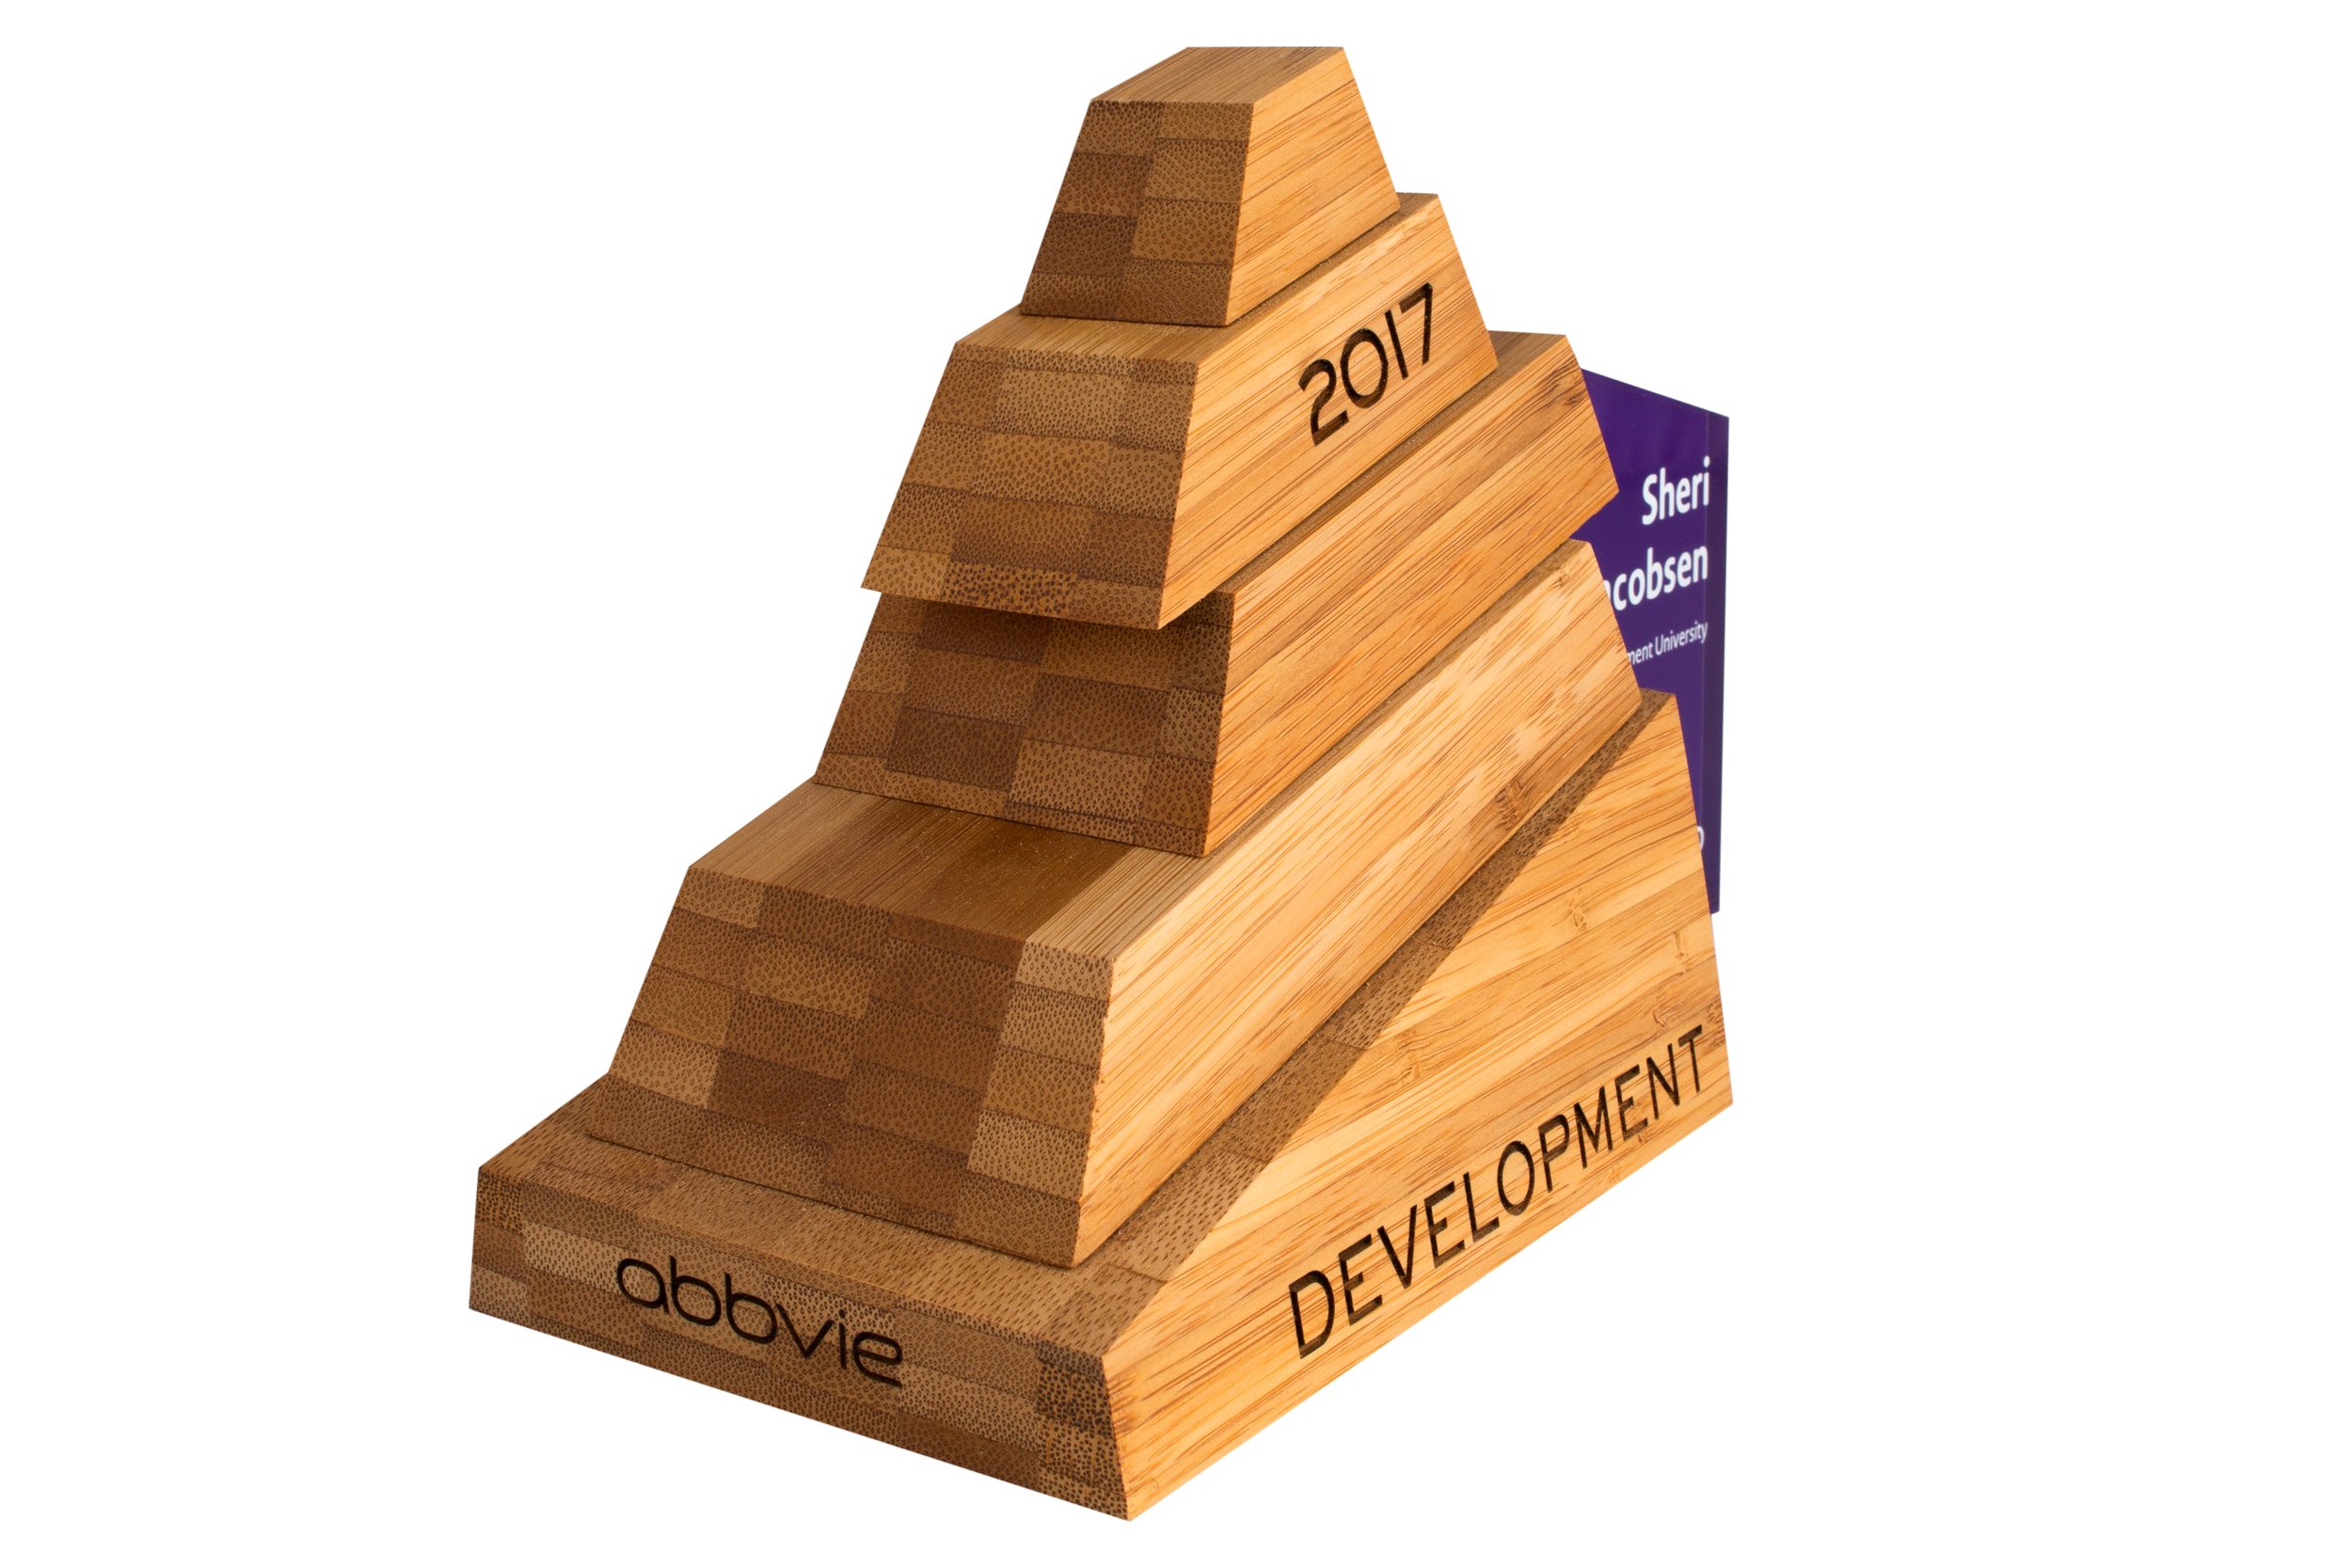 abbvie-development-awards-sustianably-sourced-bamboo-fancy-design-wow-factor